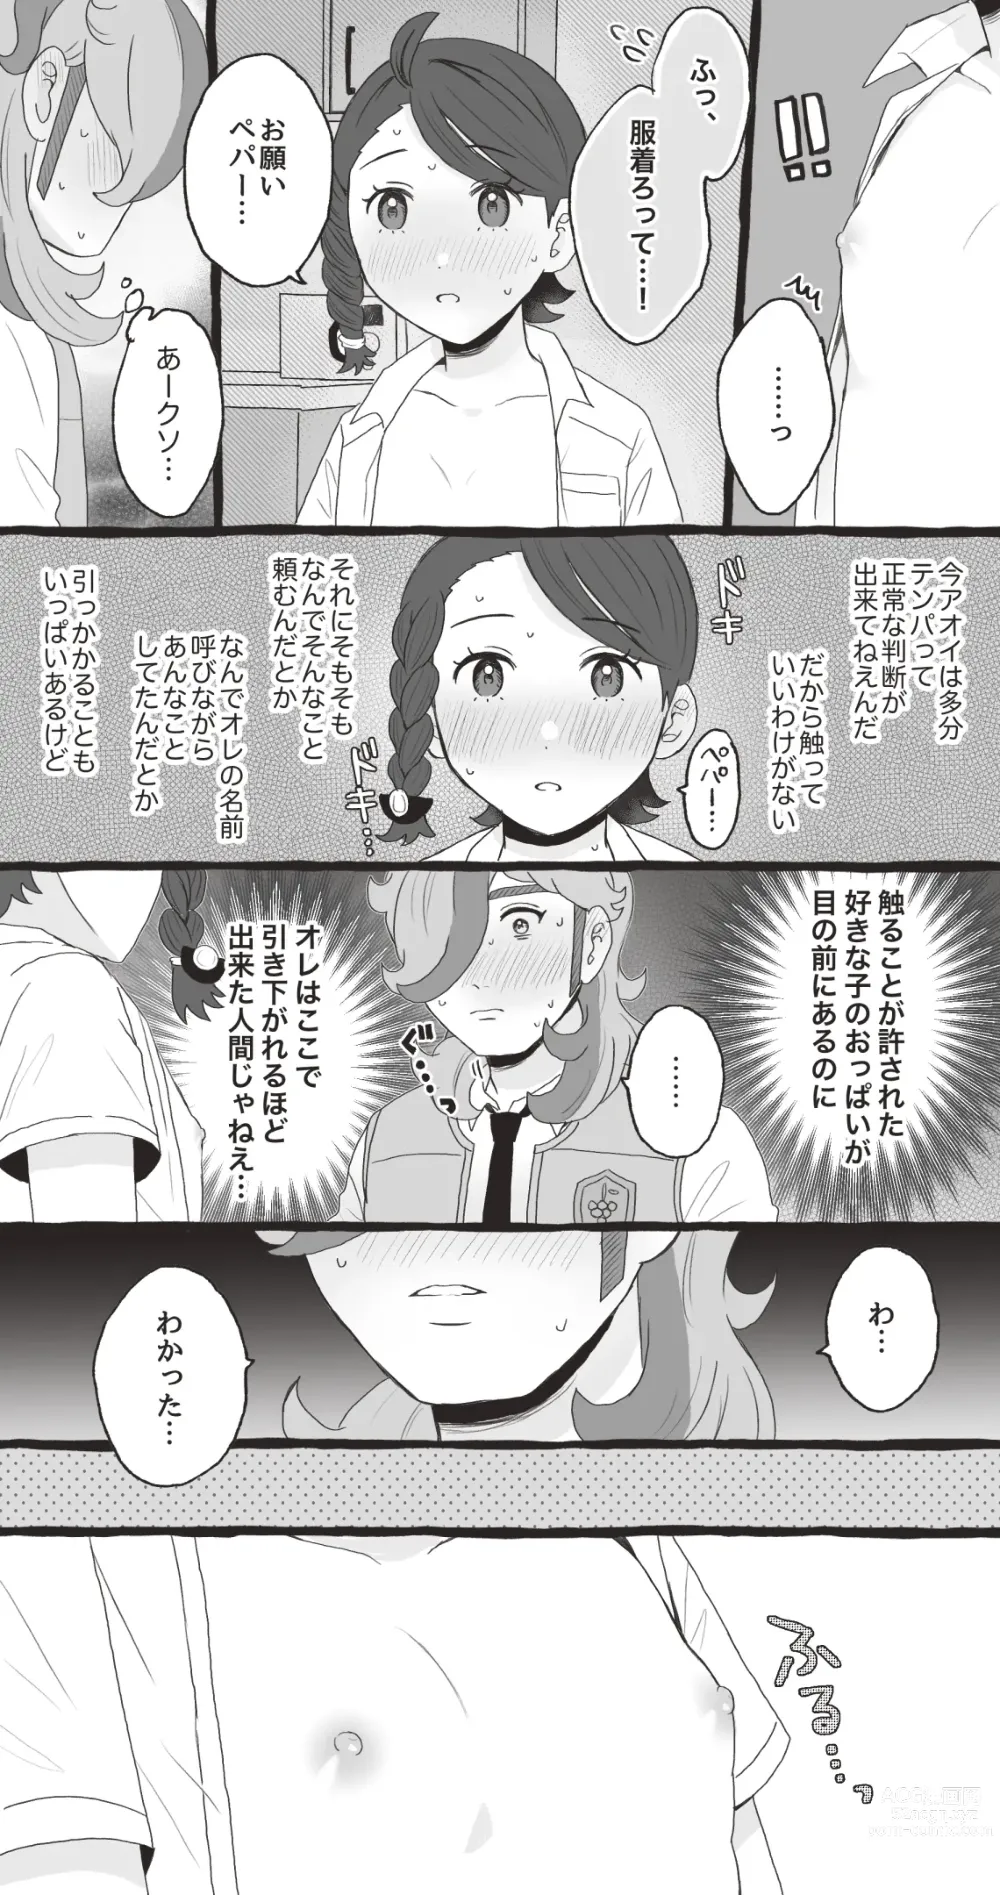 Page 7 of doujinshi PeppeAo Bi Ero Manga